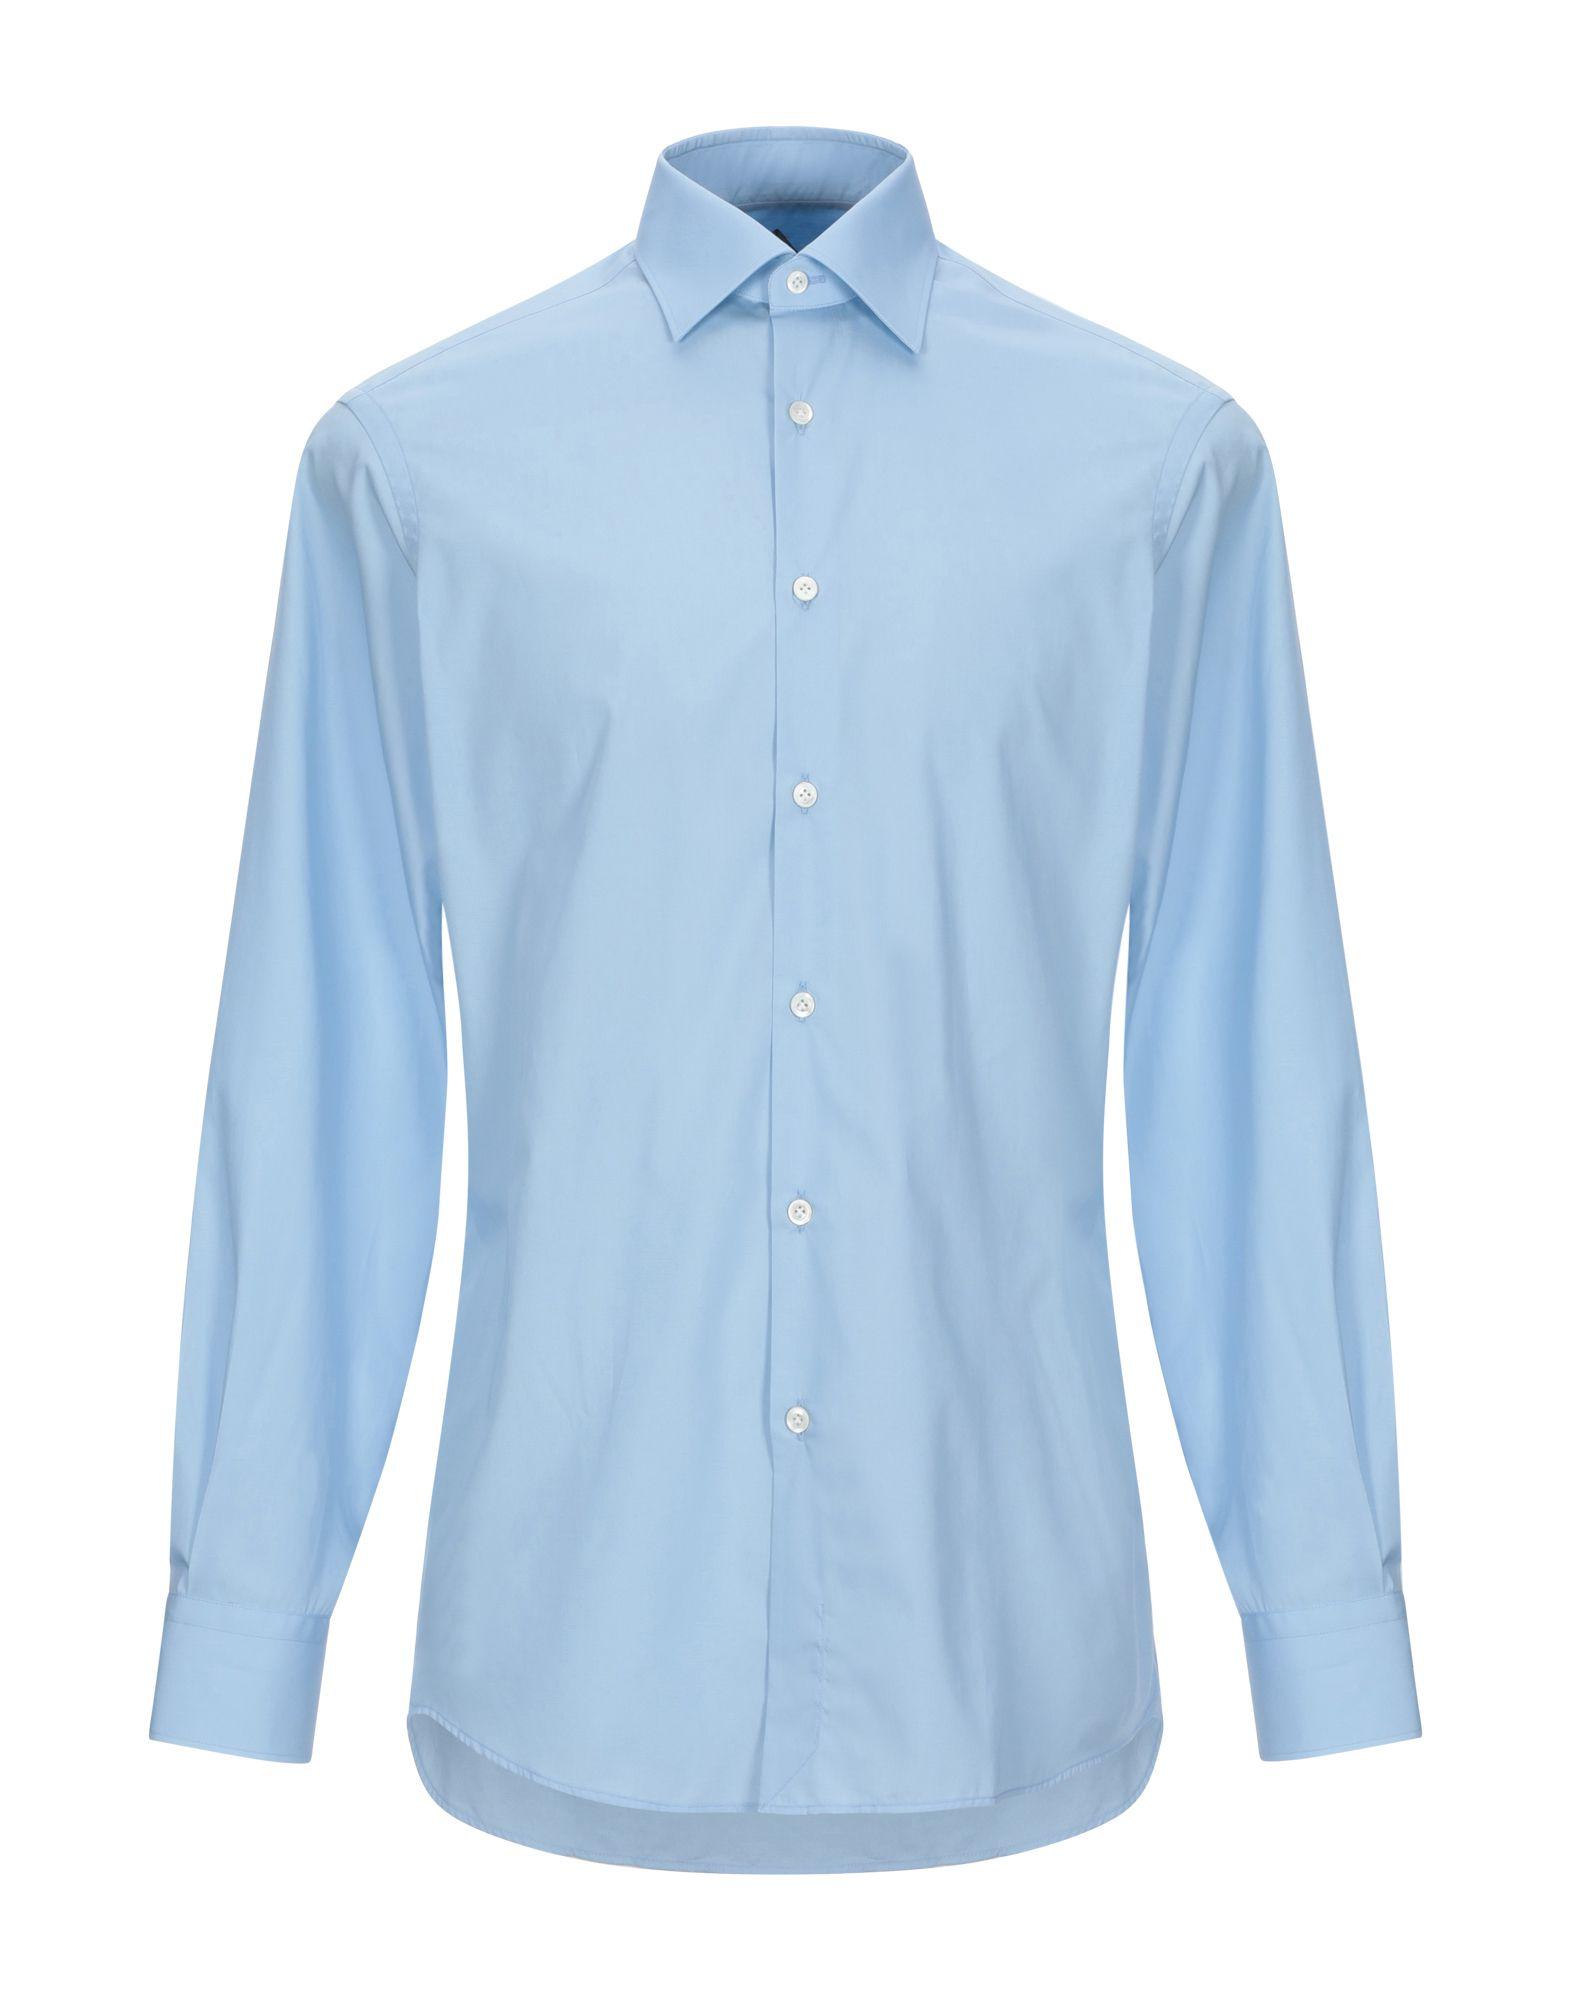 Pal Zileri Cotton Shirt in Sky Blue (Blue) for Men - Lyst